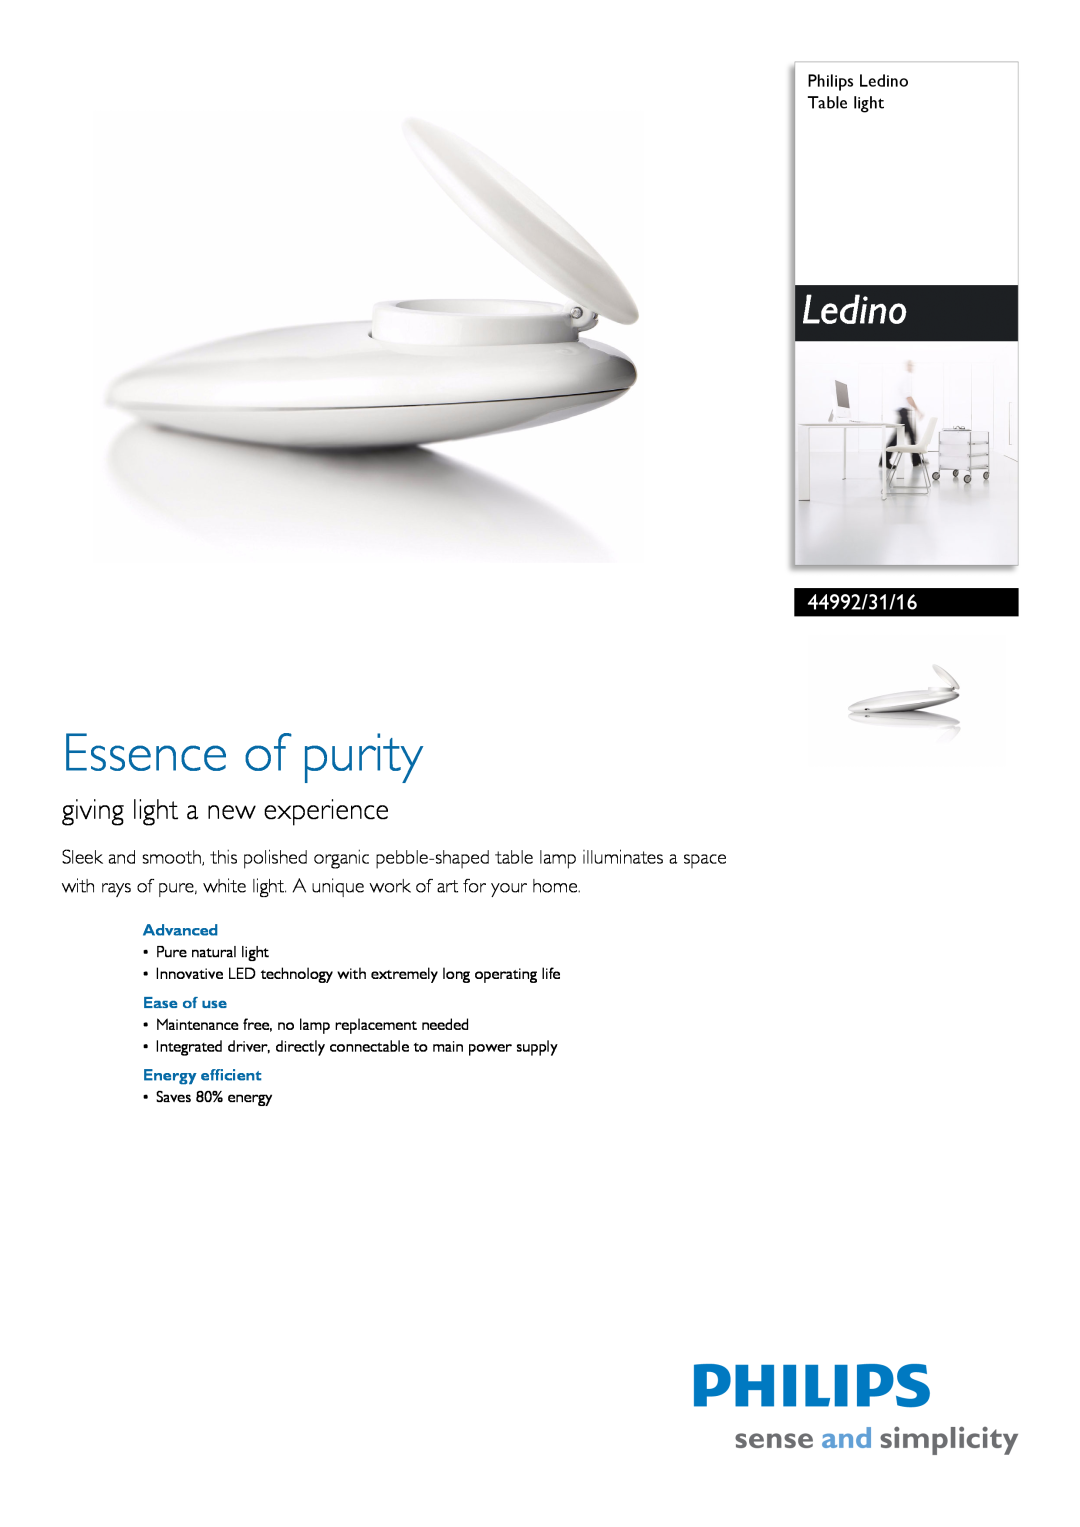 Philips 44992/31/16 manual Philips Ledino Table light, Advanced, Ease of use, Energy efficient, Essence of purity 